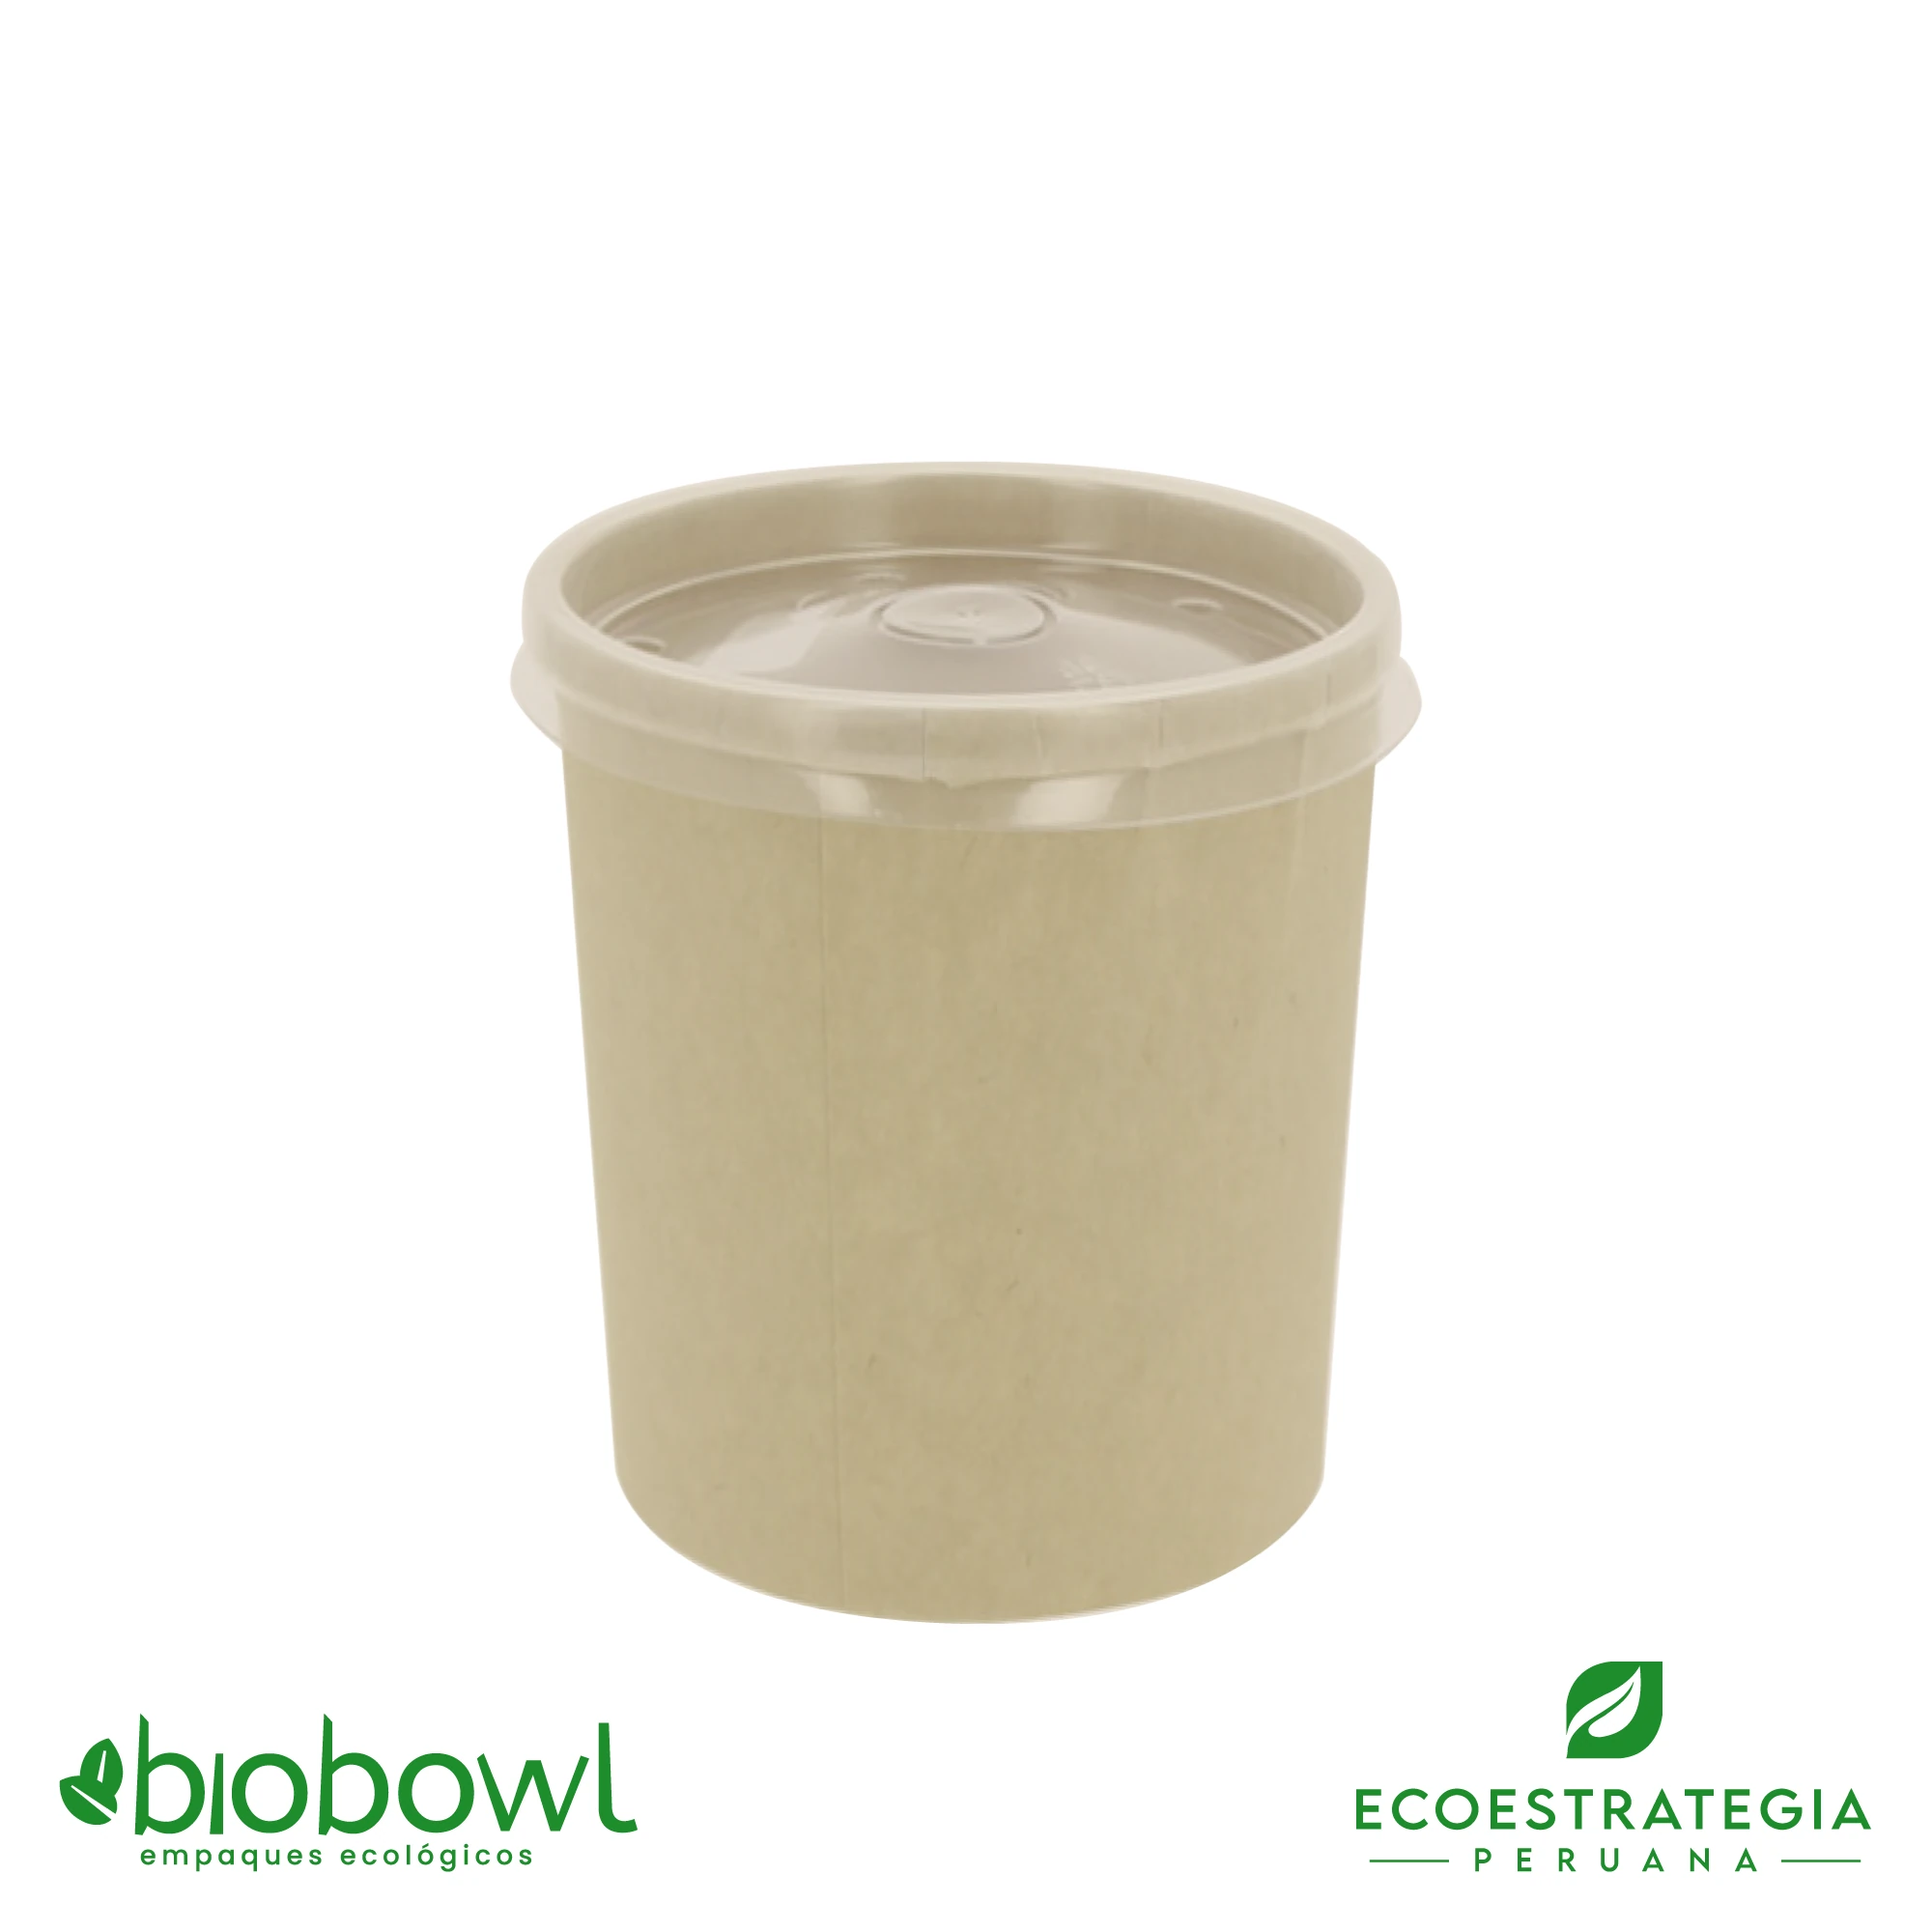 Este envase biodegradable es un bowl 16oz hecho de bambú. Envases descartables con gramaje ideal, cotiza tus vasos para helados, táper para sopa, bowls sopero